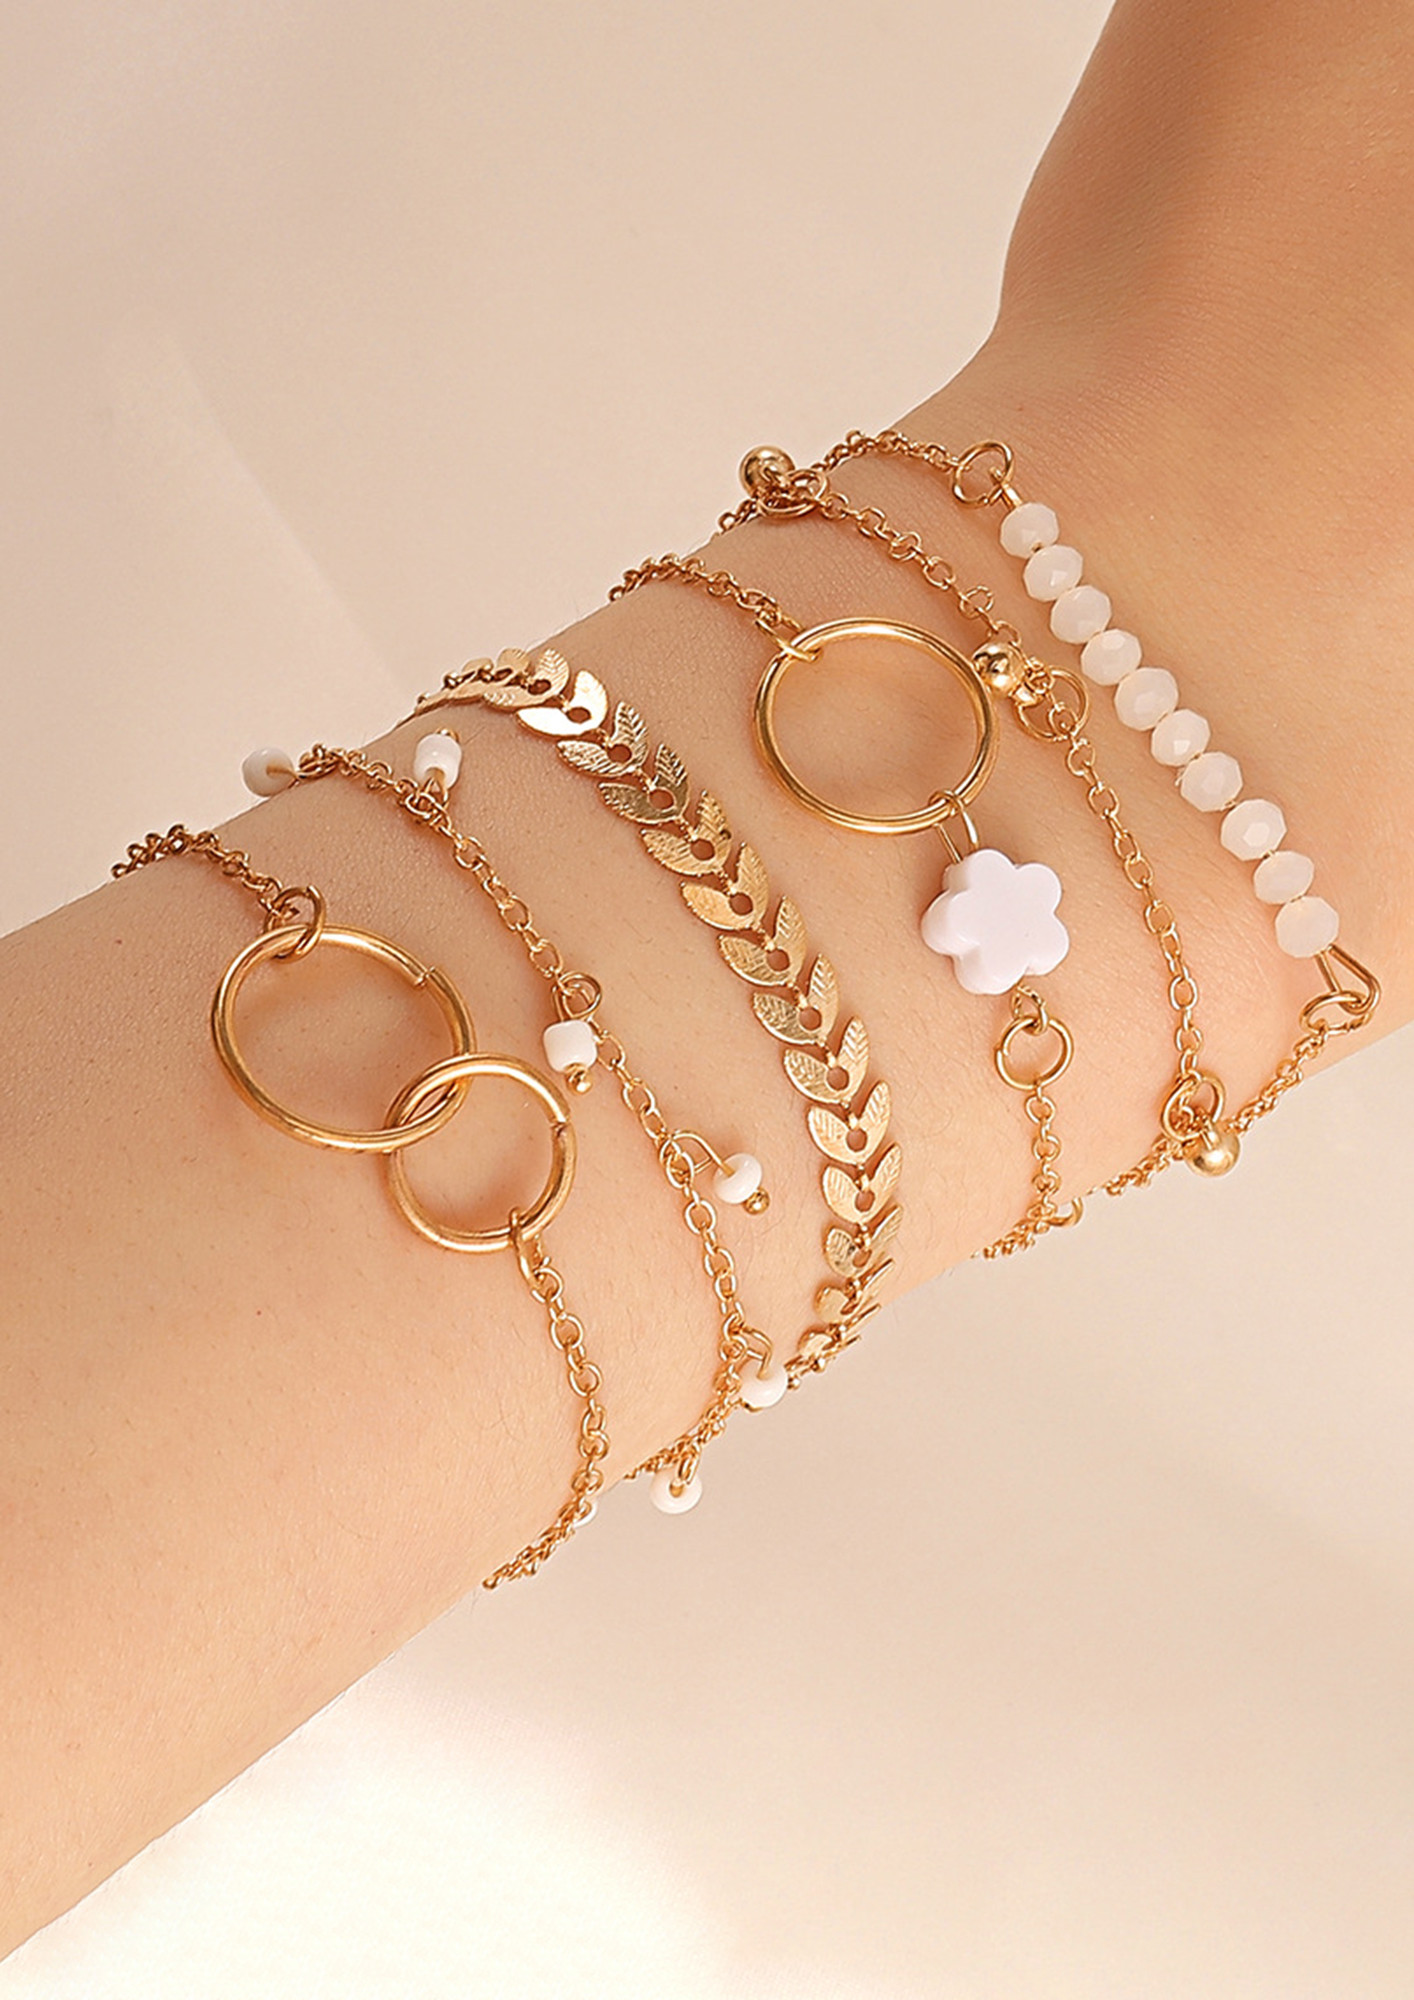 Bracelets for Women - Buy Stylish Bracelets Online | Blingvine – Page 4 |  Gold bracelet for girl, Gold bracelet for women, Hand bracelet